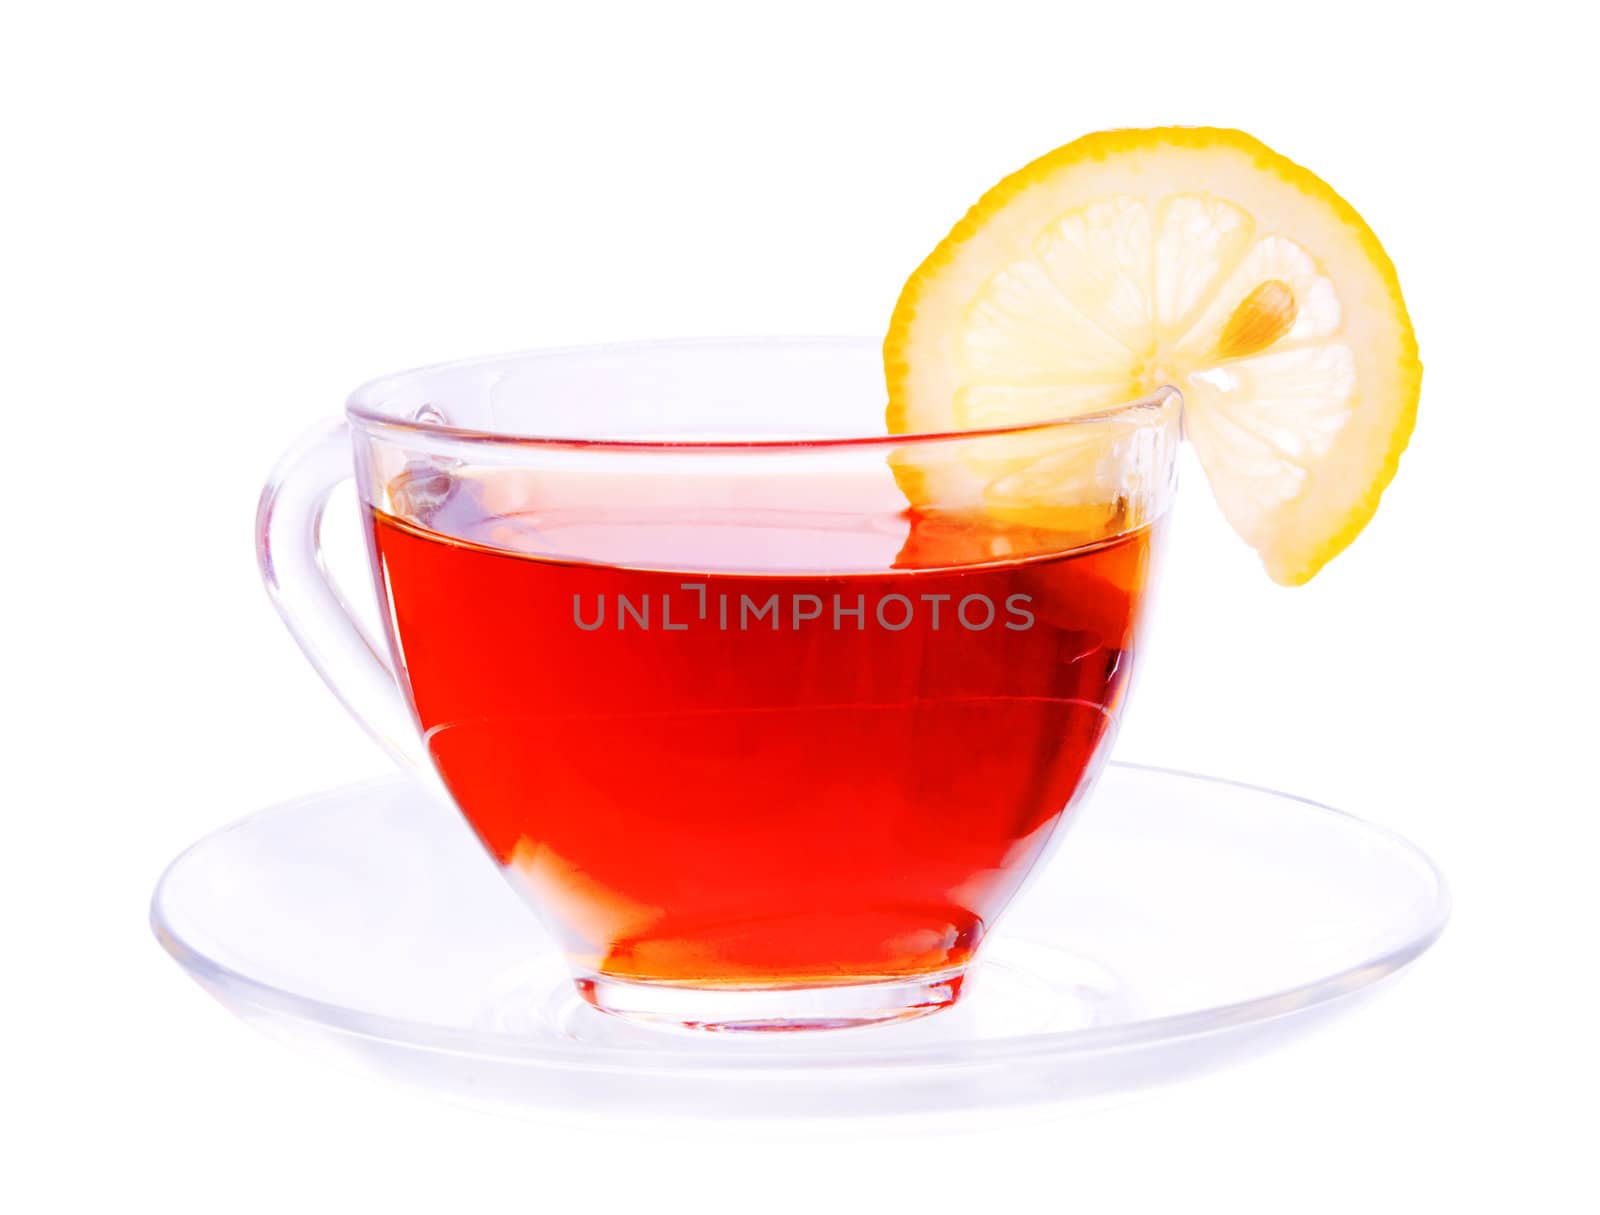 Transparent cup with tea and lemon segment by iryna_rasko